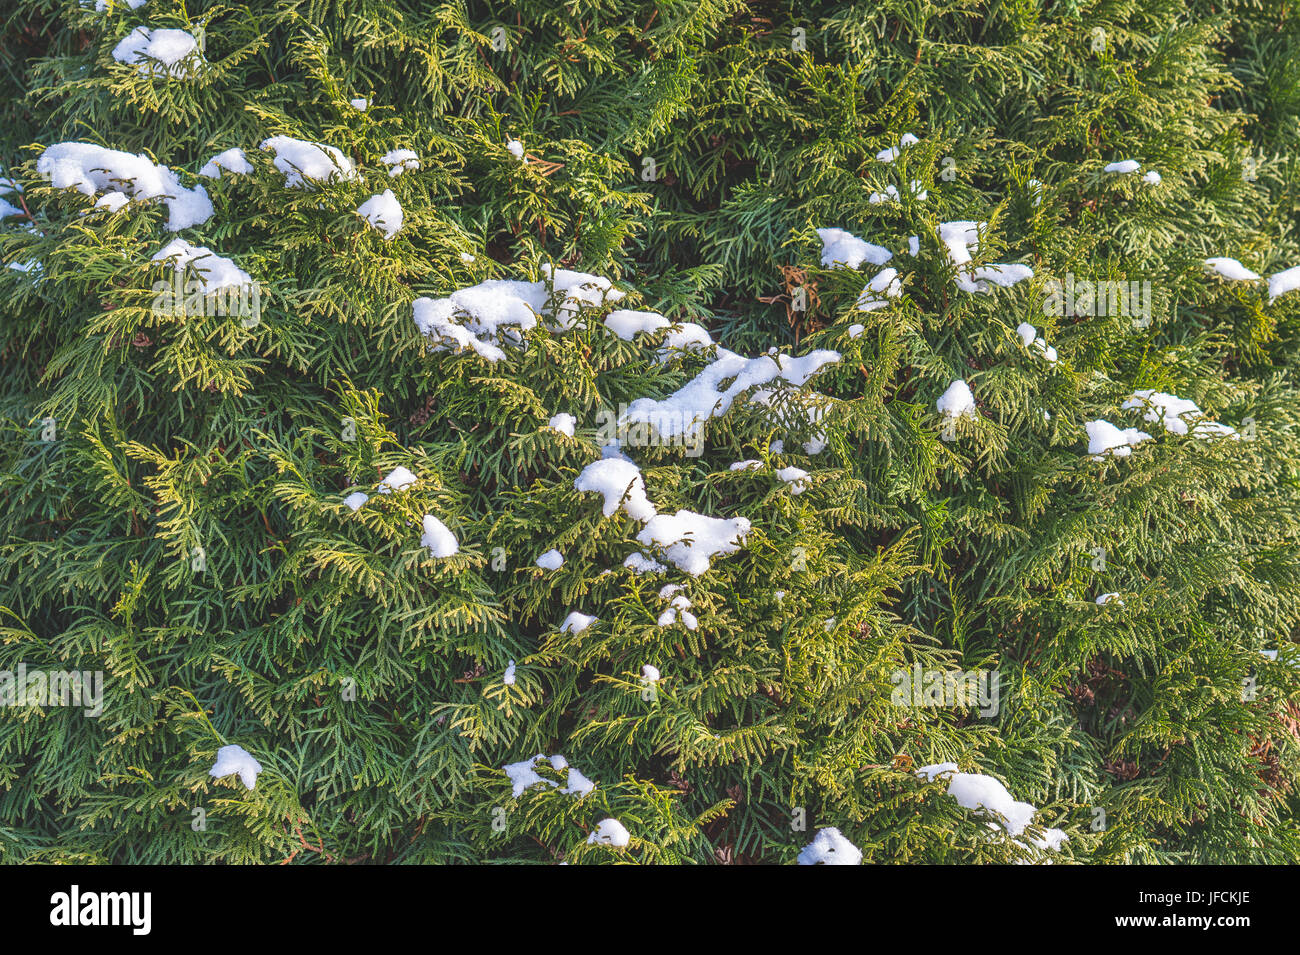 Antecedentes de las ramas de un árbol de coníferas con nieve. Ramita verde, papel tapiz de madera de pino o abeto con mucho detalle. Perfecto telón de fondo para la naturaleza. Foto de stock